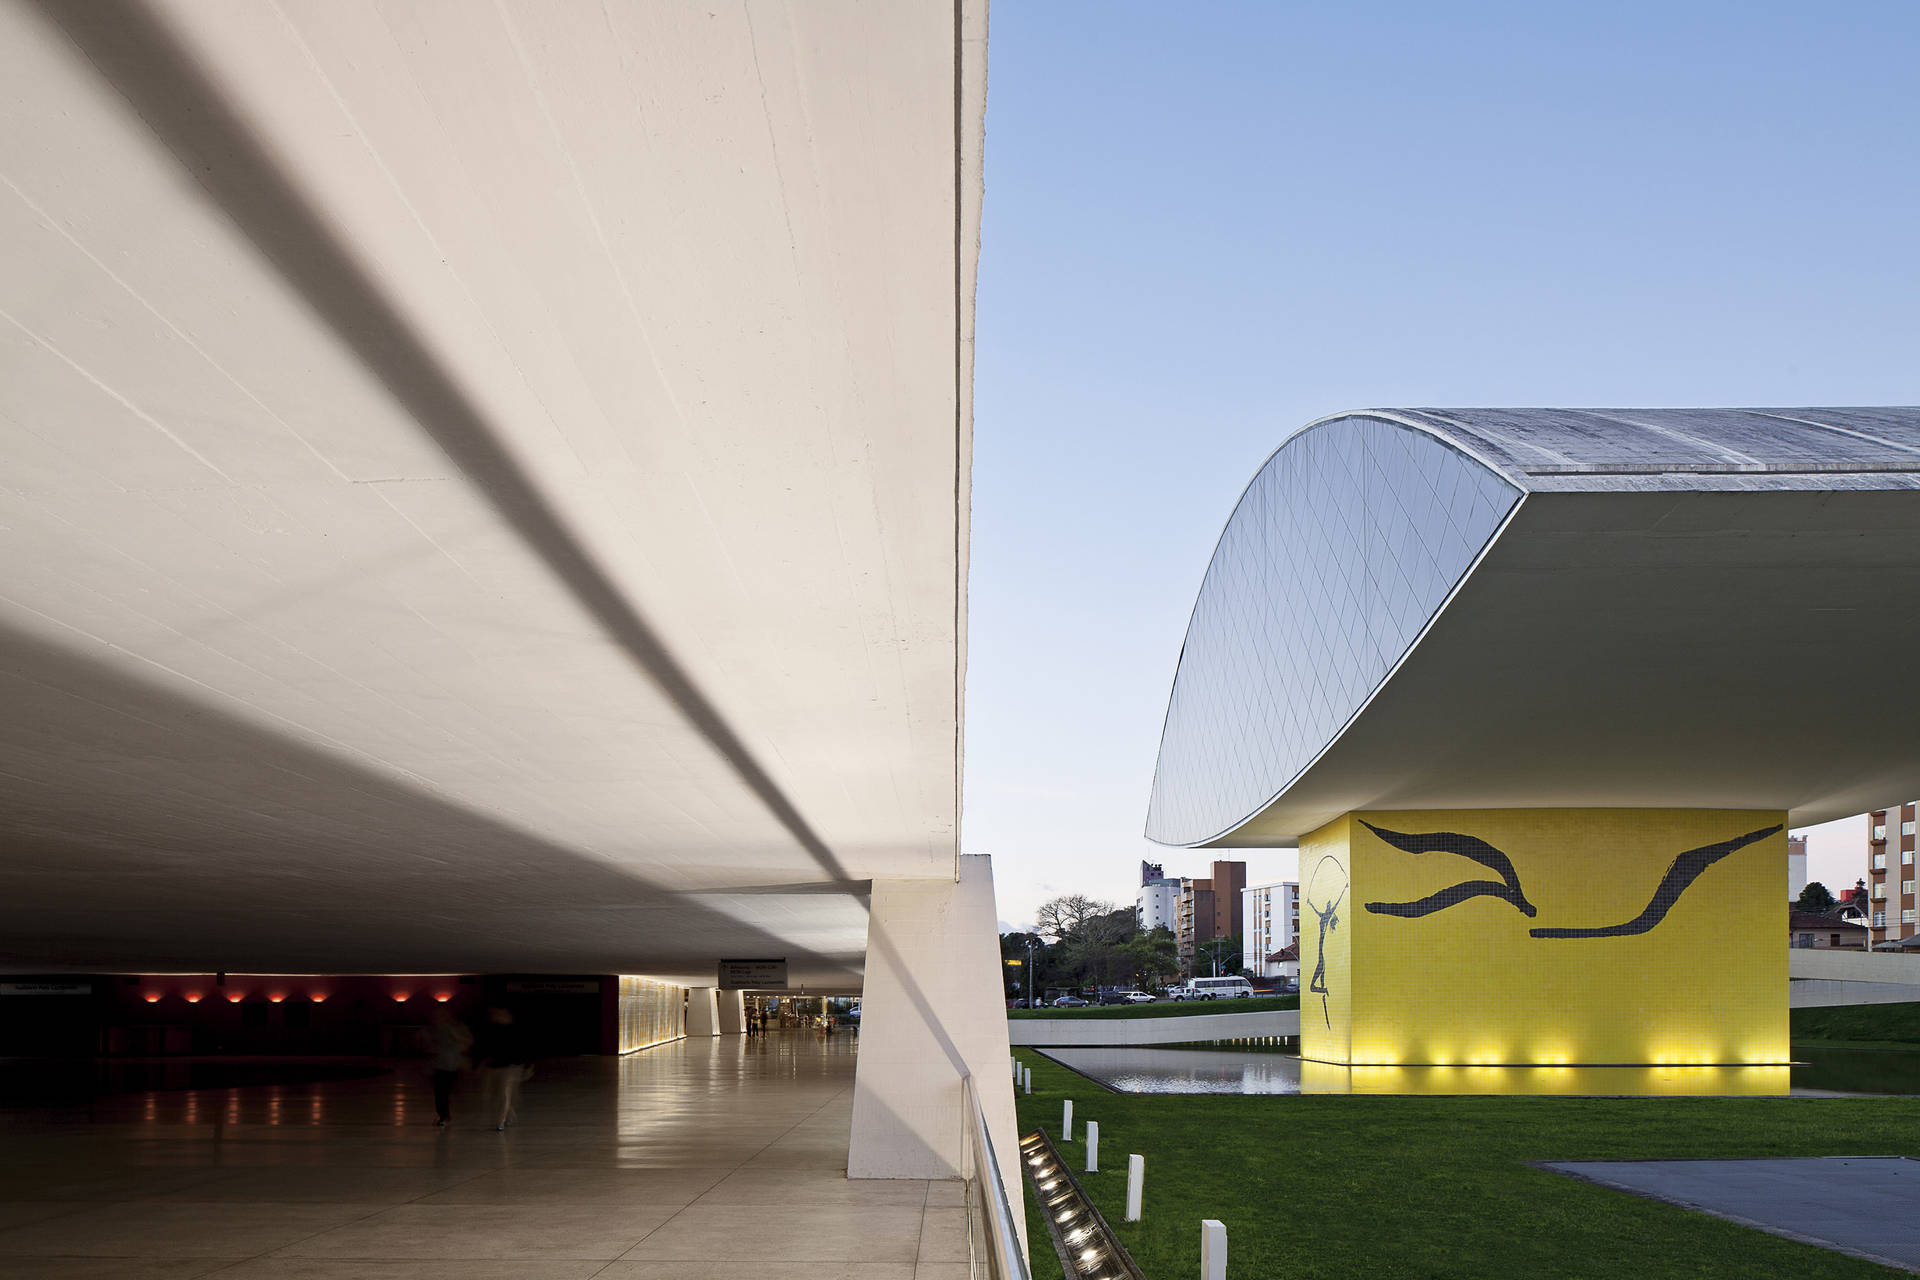 No mÃªs de aniversÃ¡rio, Museu Oscar Niemeyer abre todas as segundas-feiras